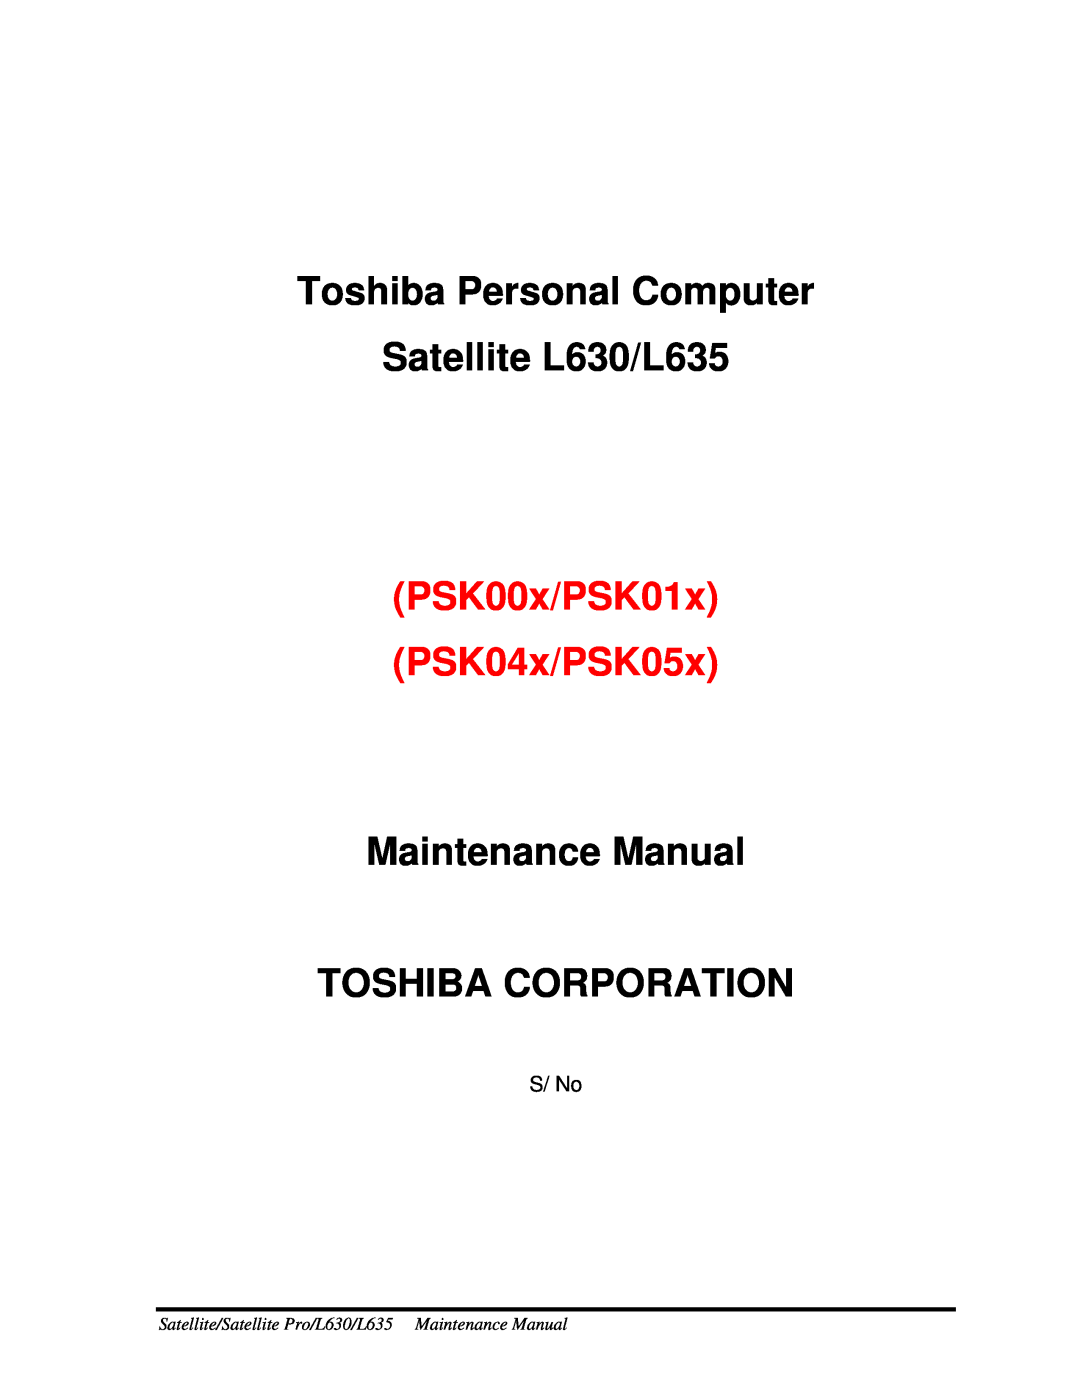 Toshiba manual Toshiba Personal Computer Satellite L630/L635, PSK00x/PSK01x PSK04x/PSK05x, S/ No 